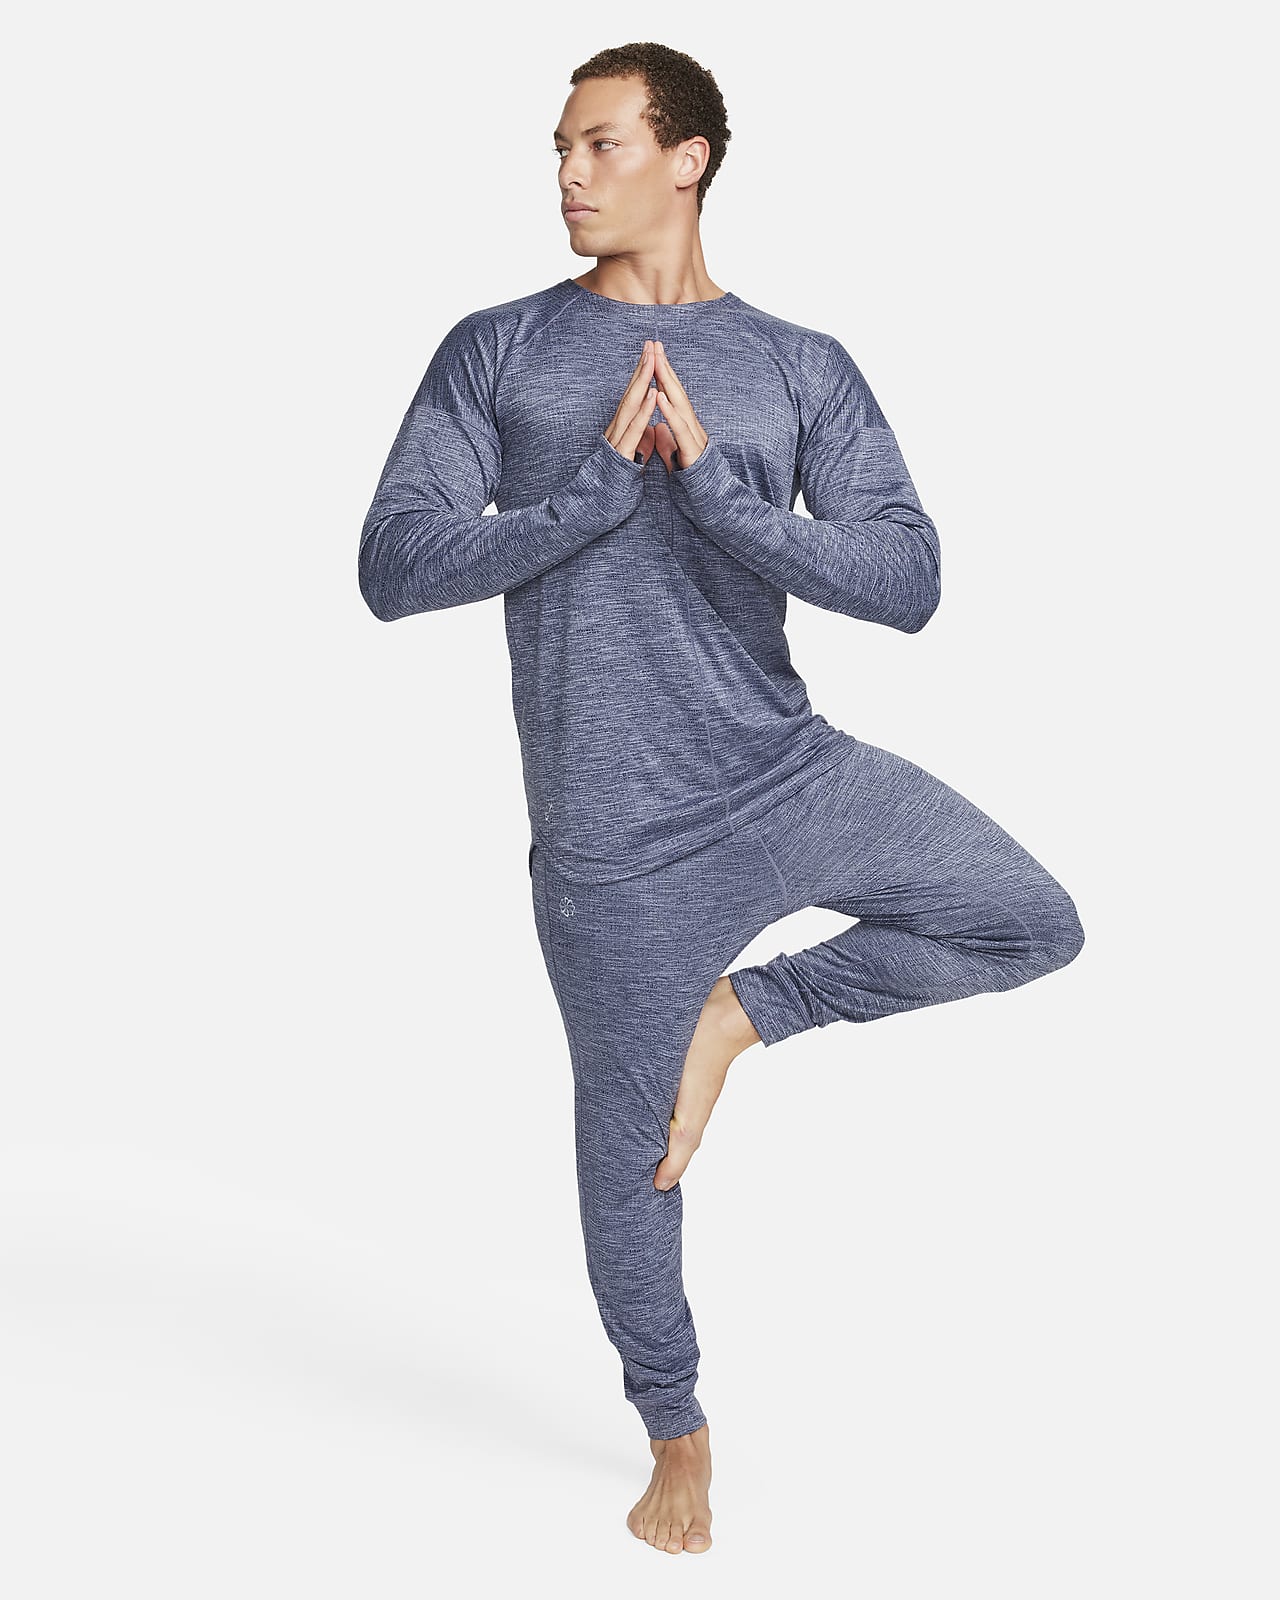 Nike Dri-Fit Yoga Training Pants AT5696-032 Size Medium